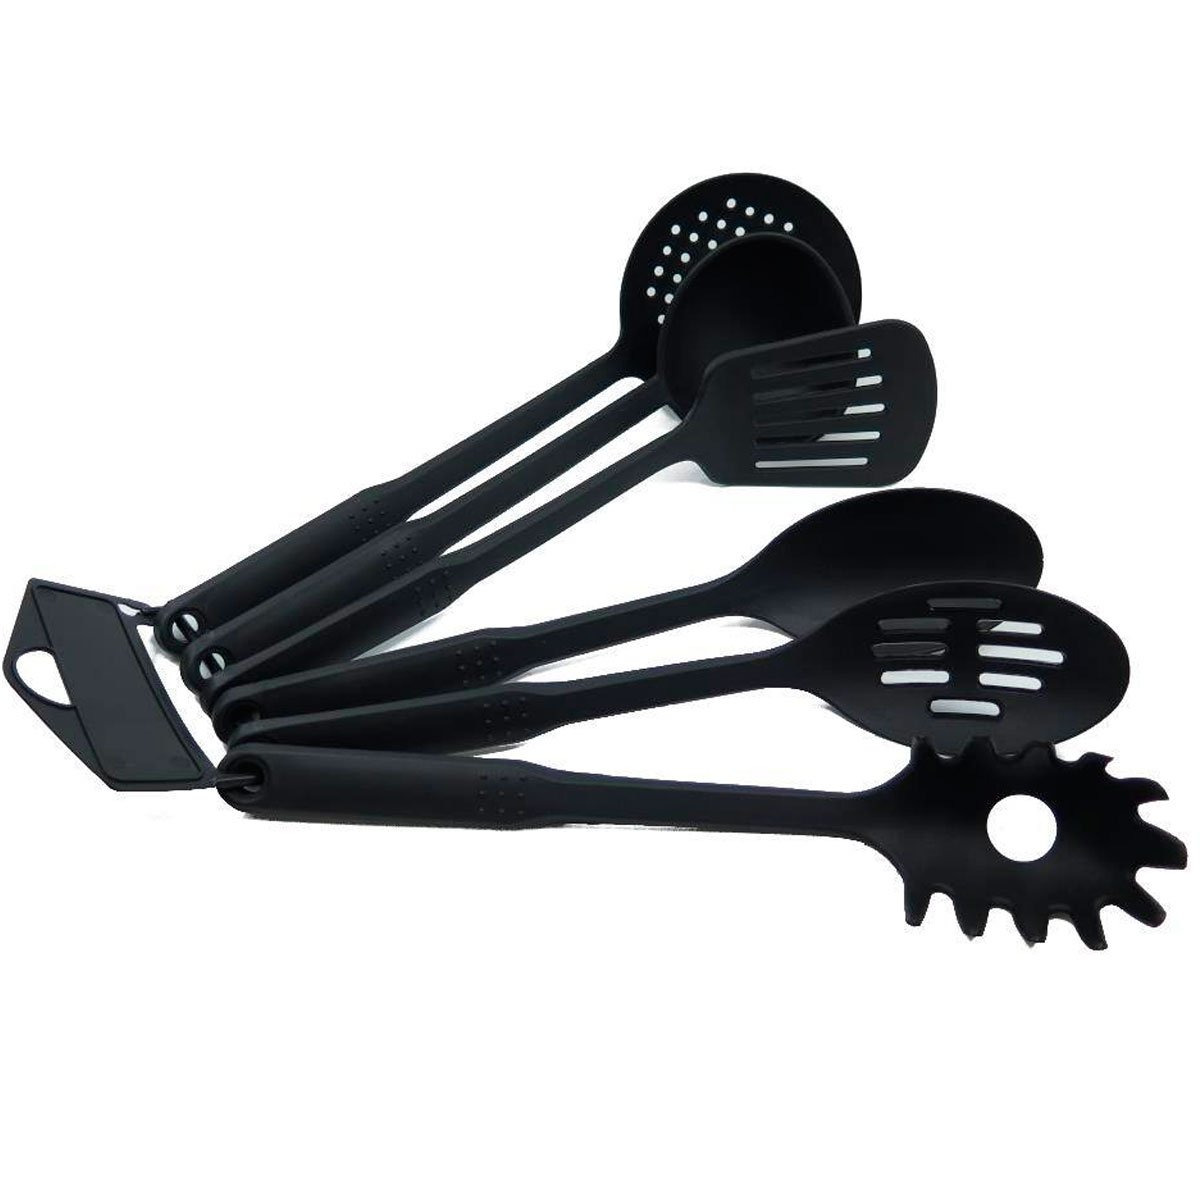 05 conjunto kit utensilios cozinha nylon pegadores preto